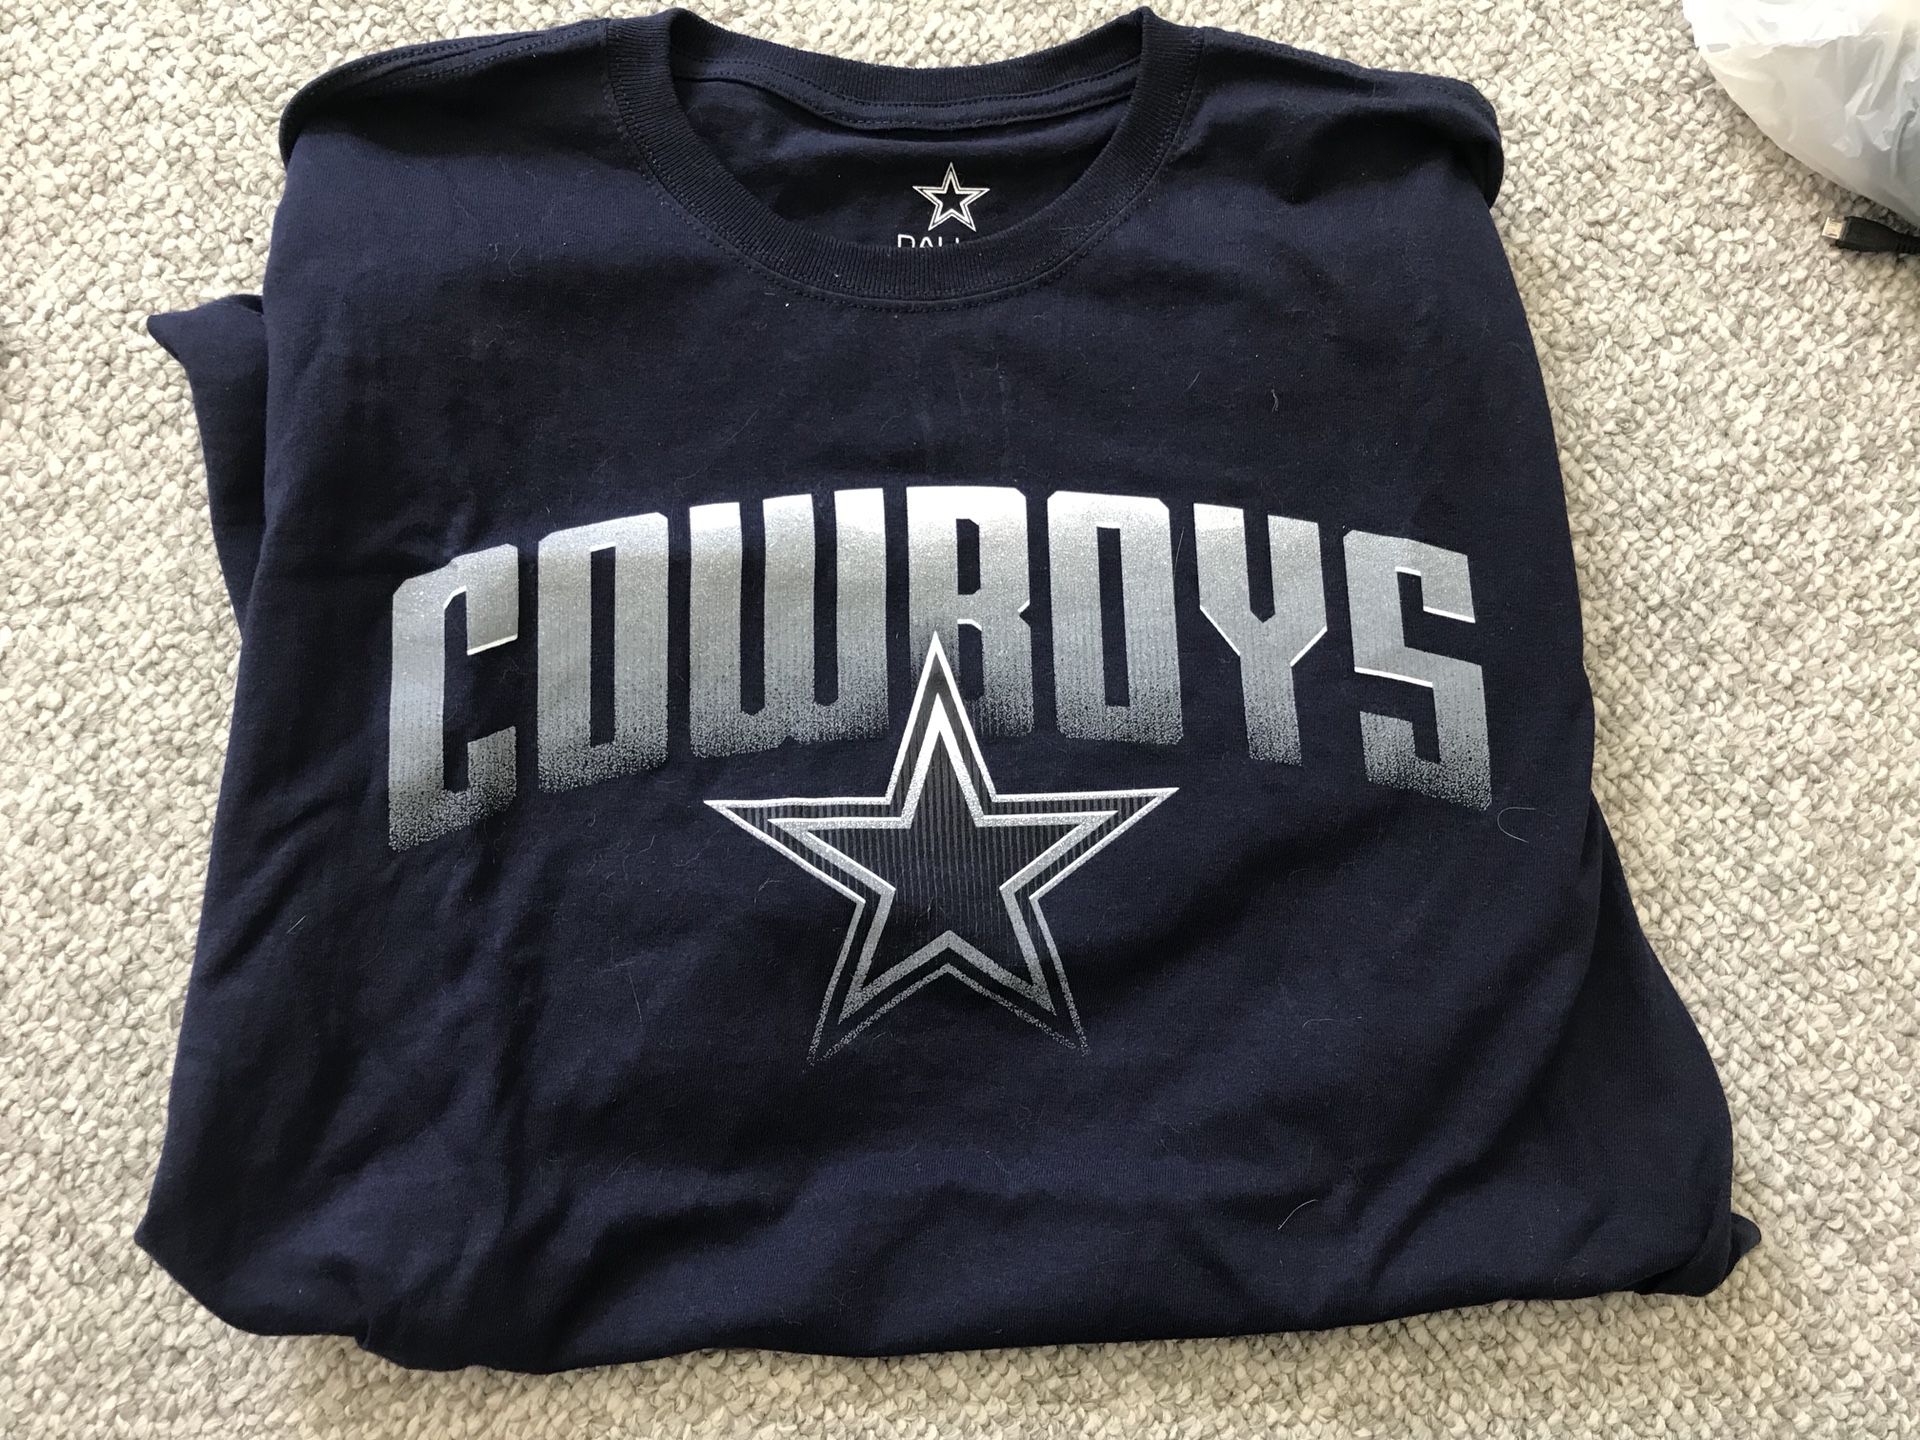 Cowboys shirt